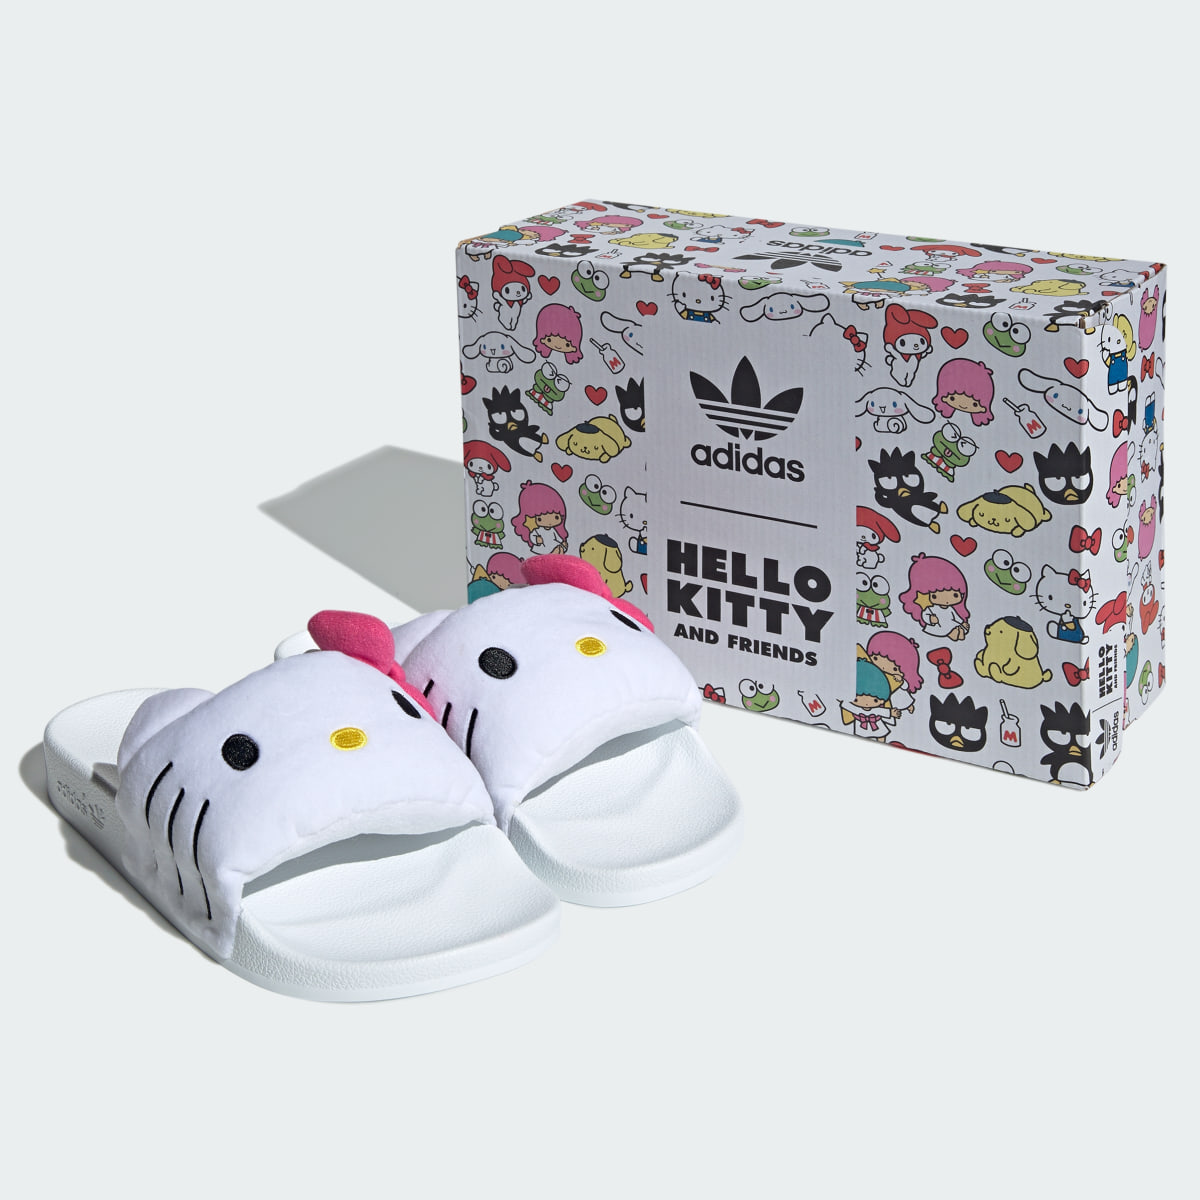 Adidas Originals x Hello Kitty Adilette Slides. 10